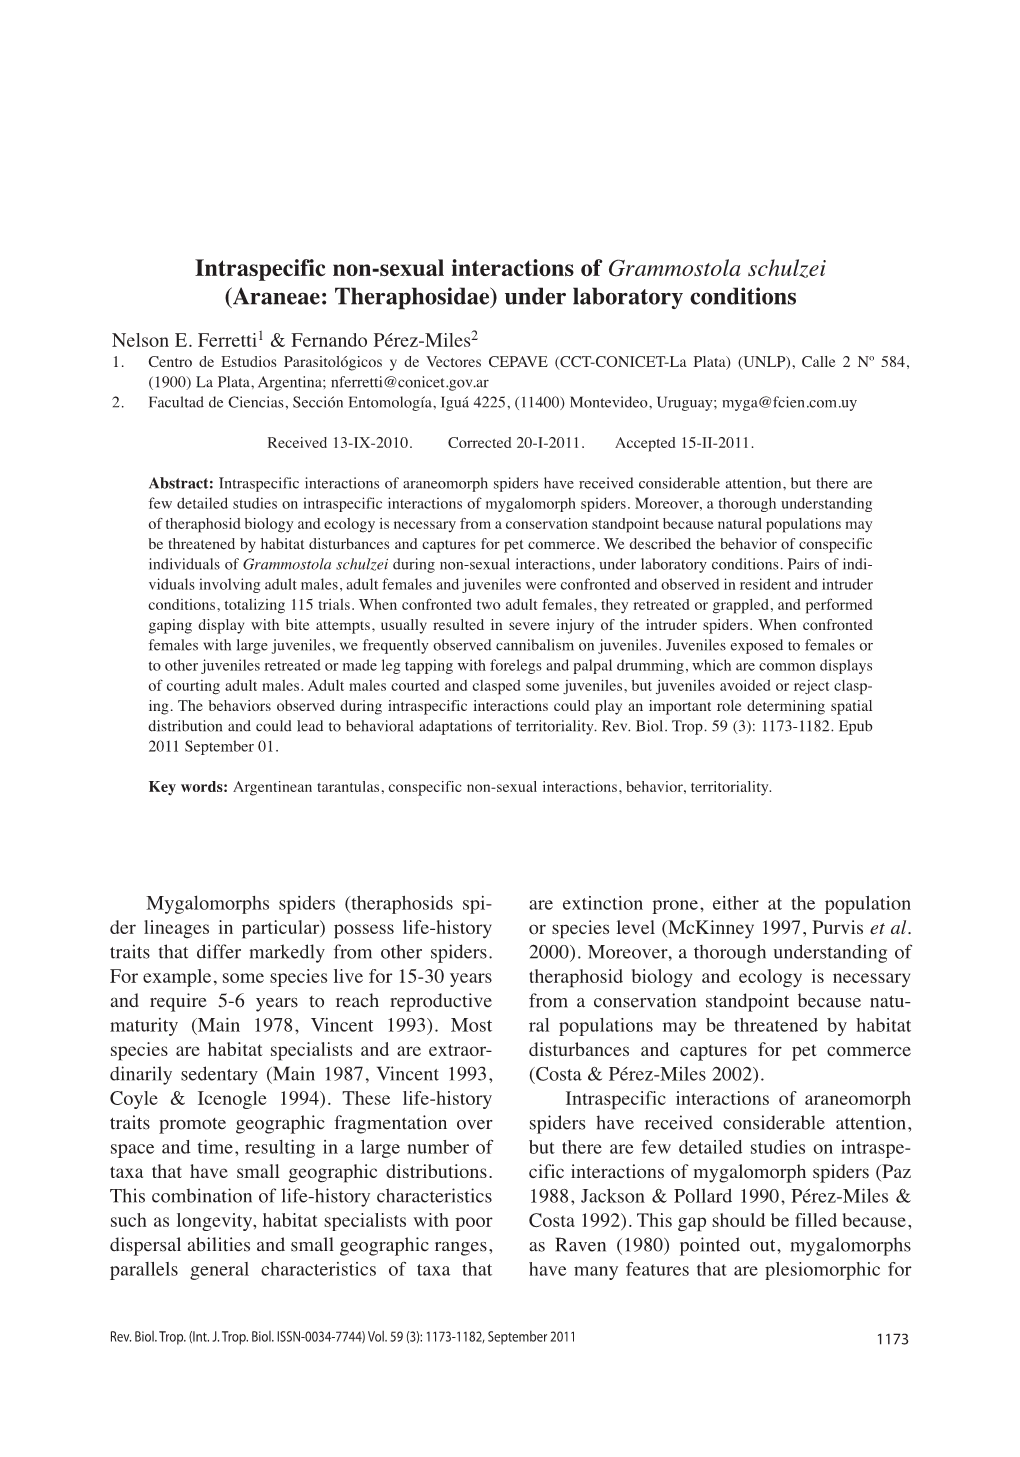 Intraspecific Non-Sexual Interactions of Grammostola Schulzei (Araneae: Theraphosidae) Under Laboratory Conditions